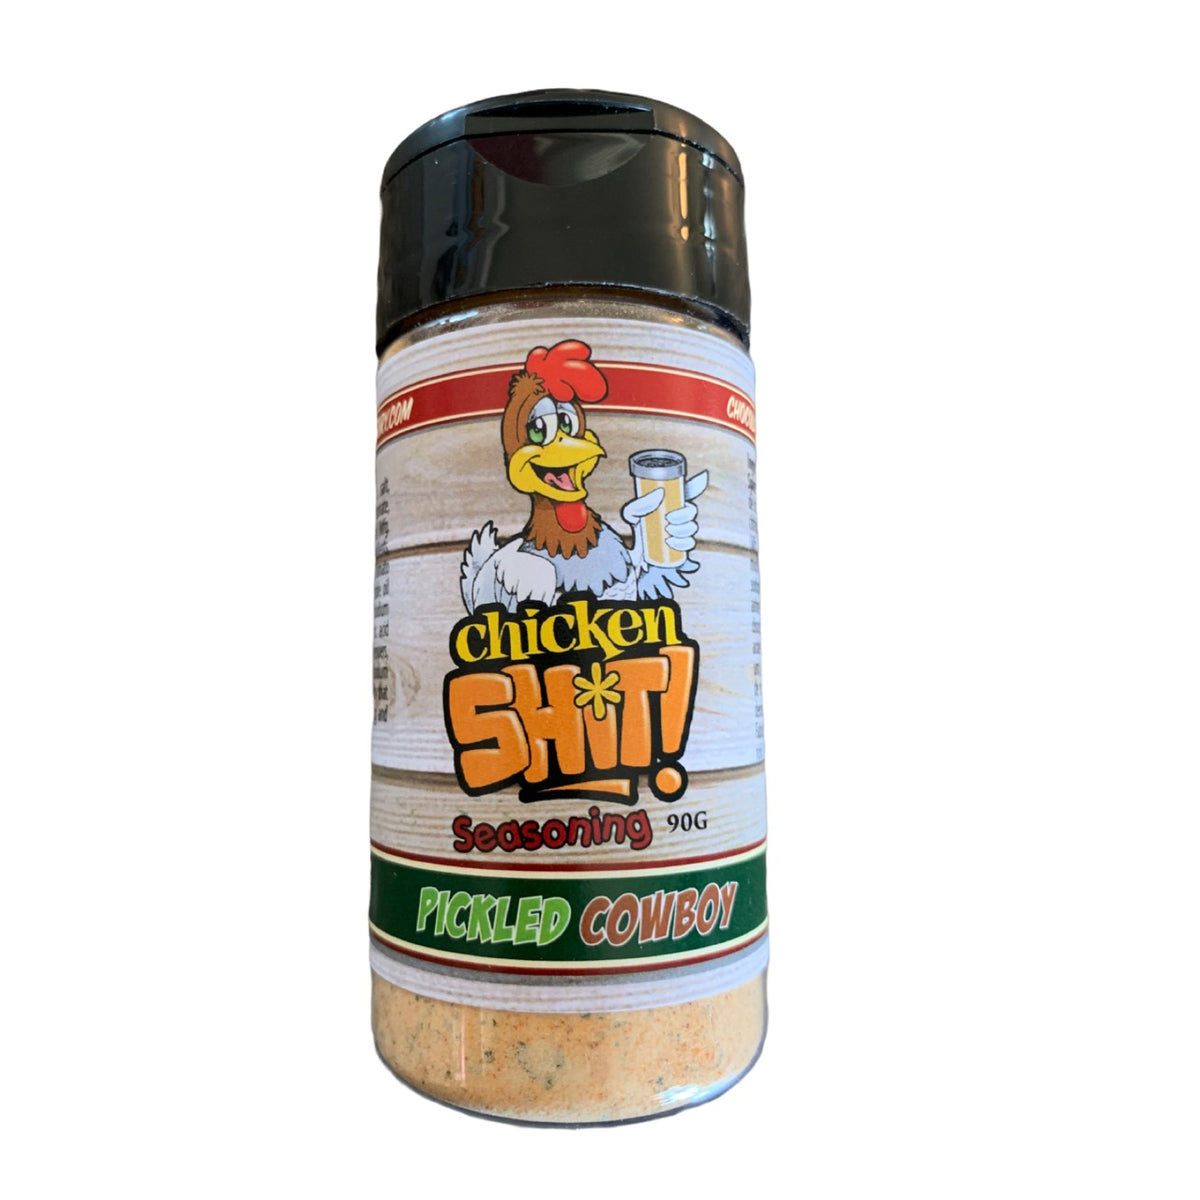 Chicken Shit Seasoning — The Pickled Cowboy